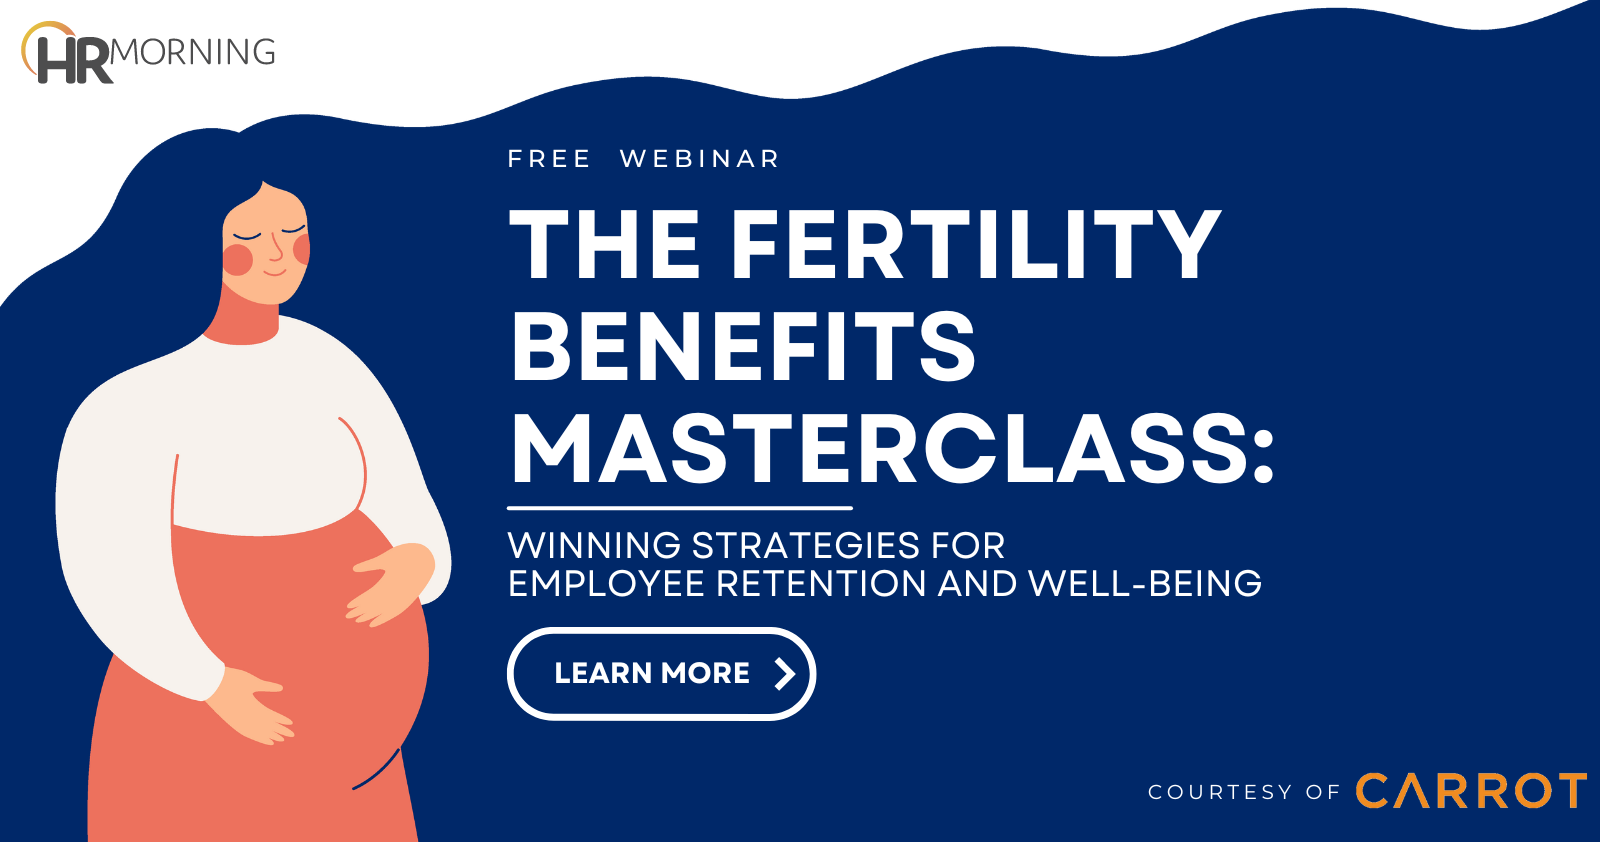 Free webinar - fertility benefits masterclass